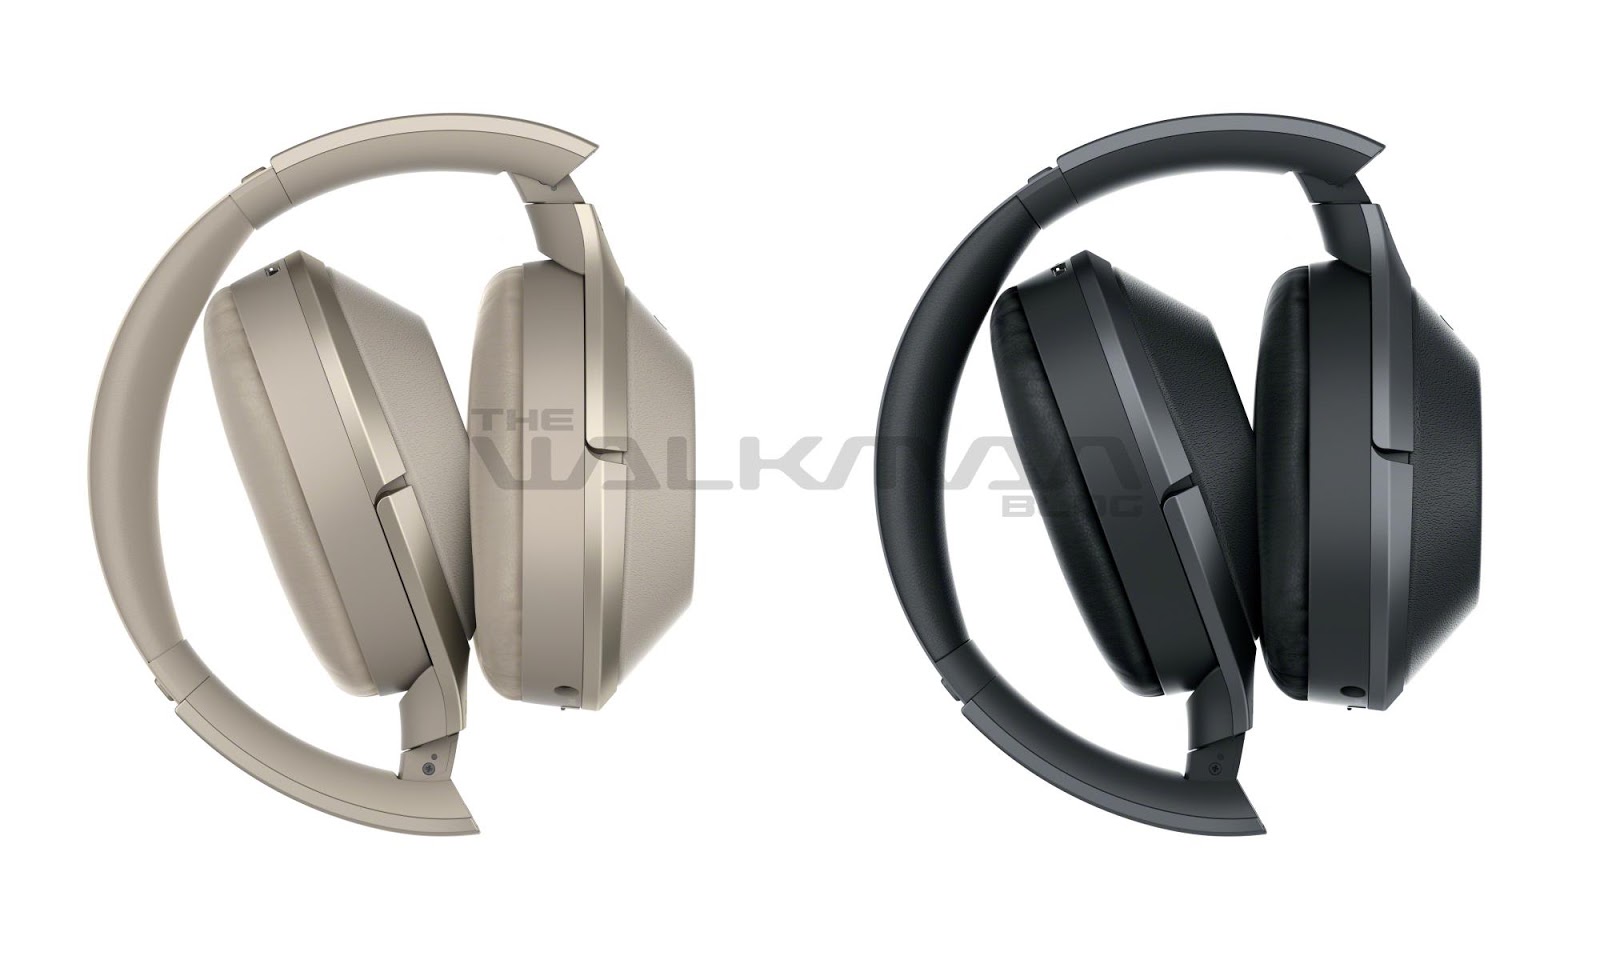 Sony MDR-1000X Headphones Introduced - The Walkman Blog